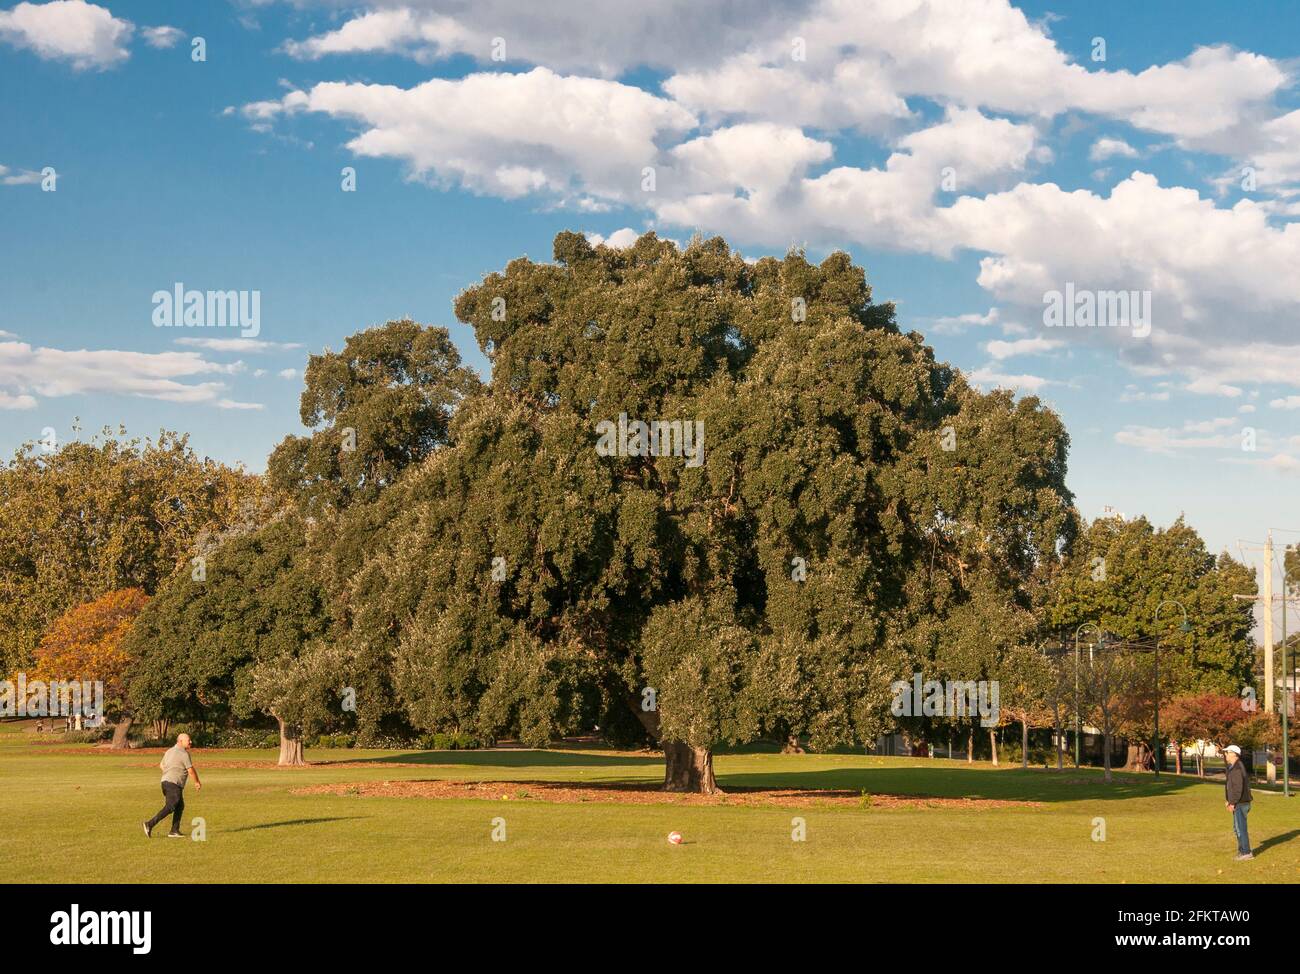 Two men play a ball game beside a mature European cork oak, Quercus suber, in Princes Park, Caulfield, Melbourne, Australia Stock Photo